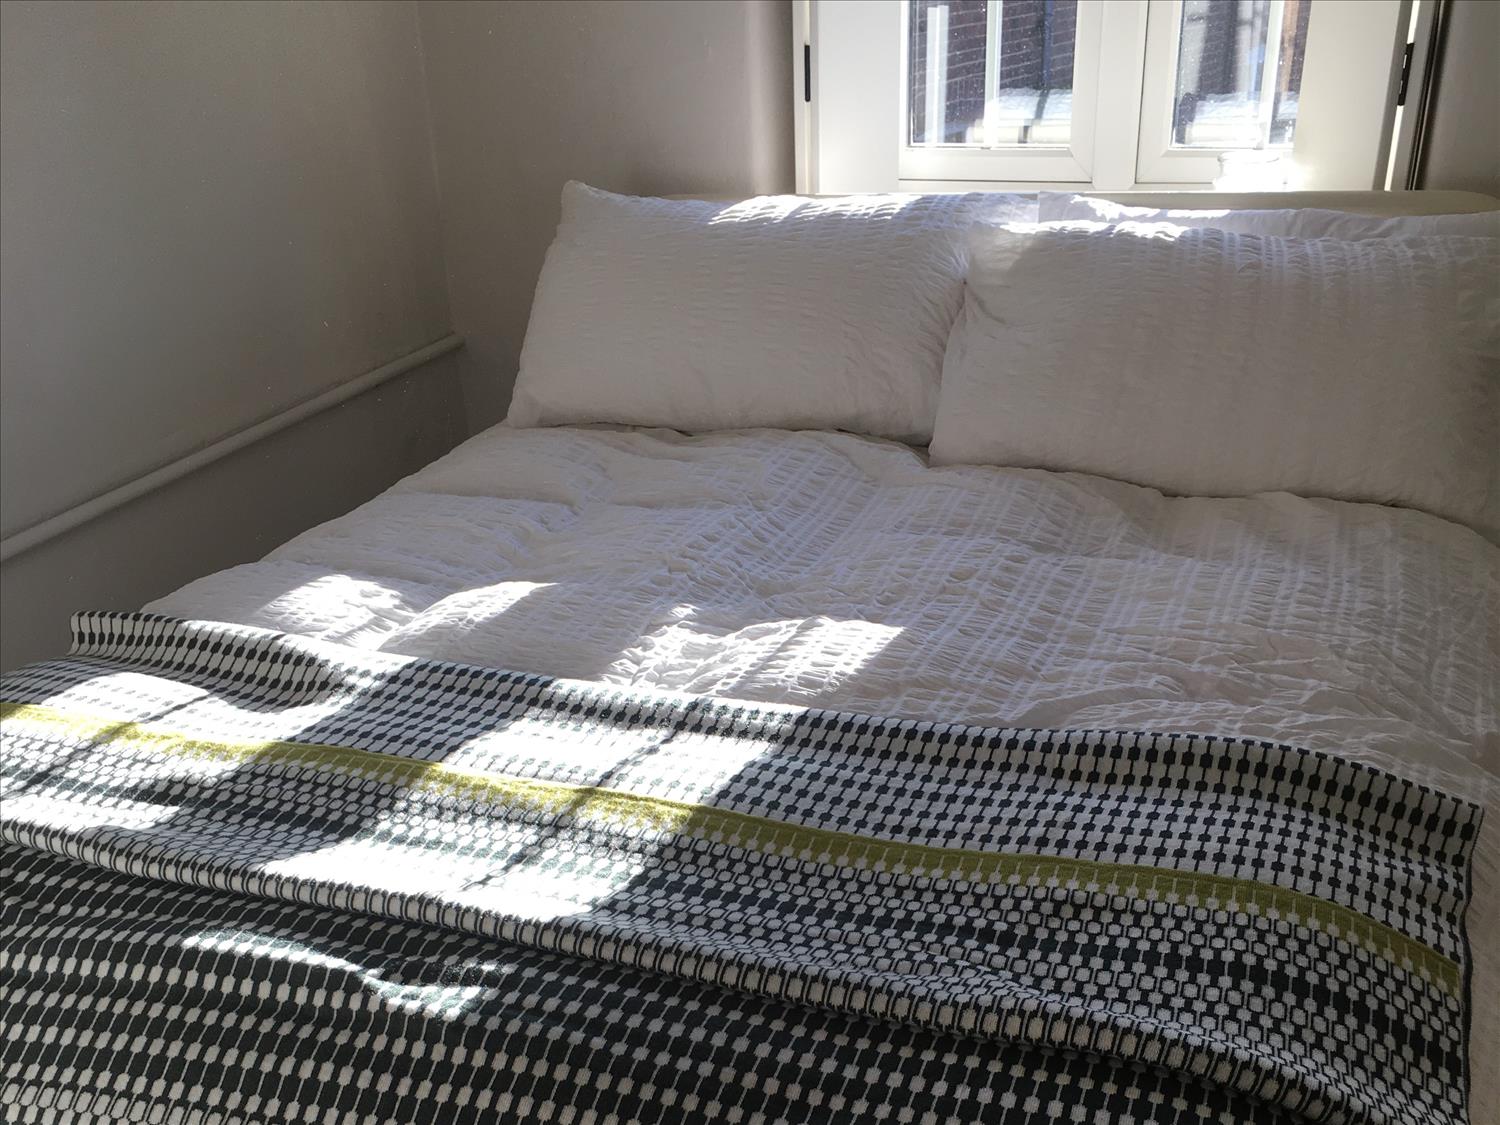 Cream wrought iron double bed @NorfolkCoastline